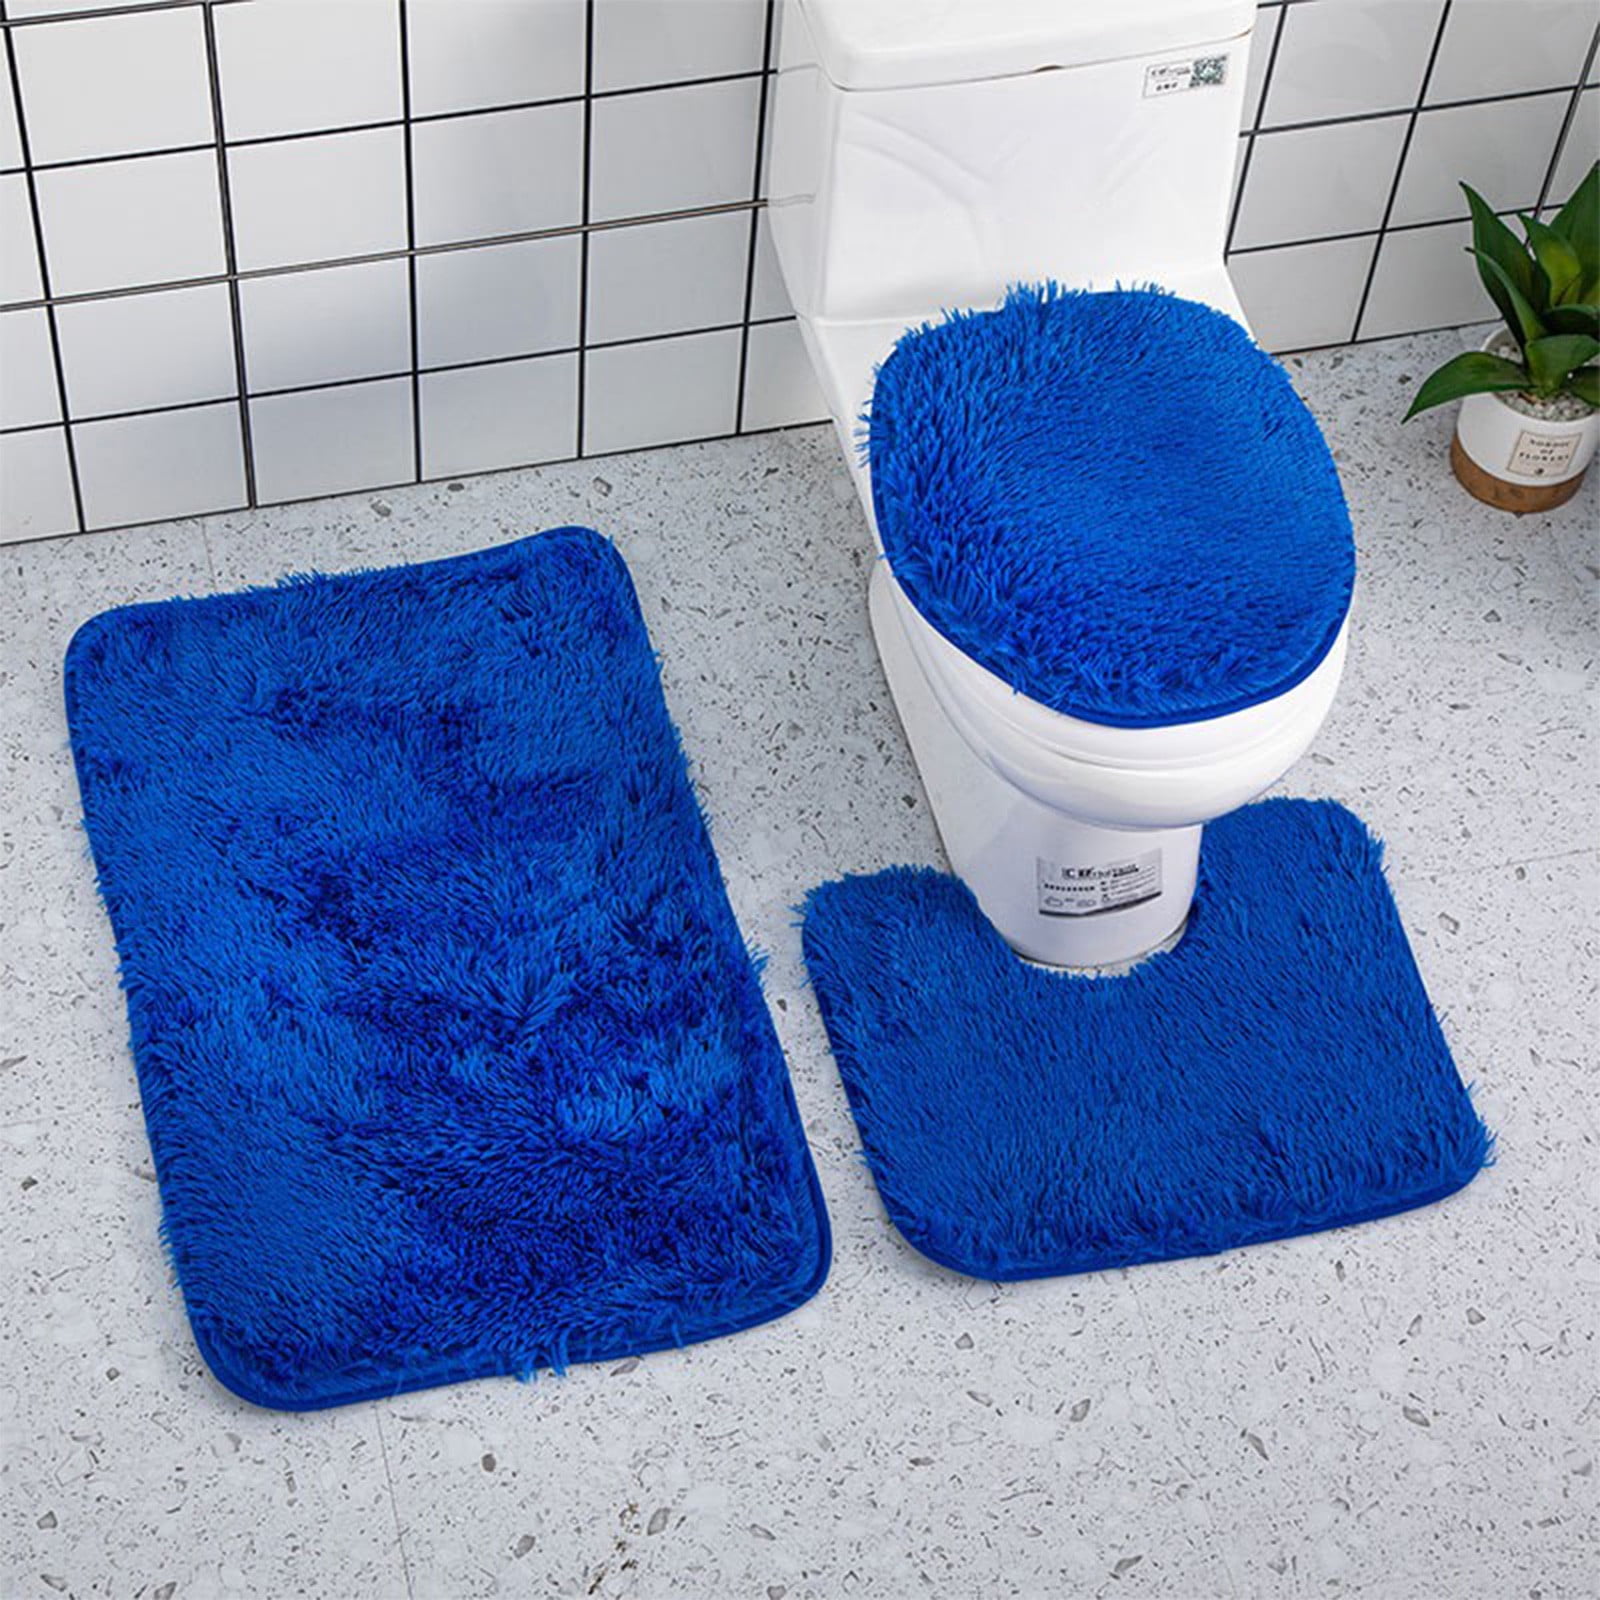 Black Friday Deals Household Supplies Solid Color 3 Piece Bathroom Rug Set Toilet Carpet Anti Slip Mat Floor 53X43X3Cm Clearance 443bc8f4 8b31 462b 9bde A3a389b5d657.5bcd3add21a3e8e0d53200b923652c62 